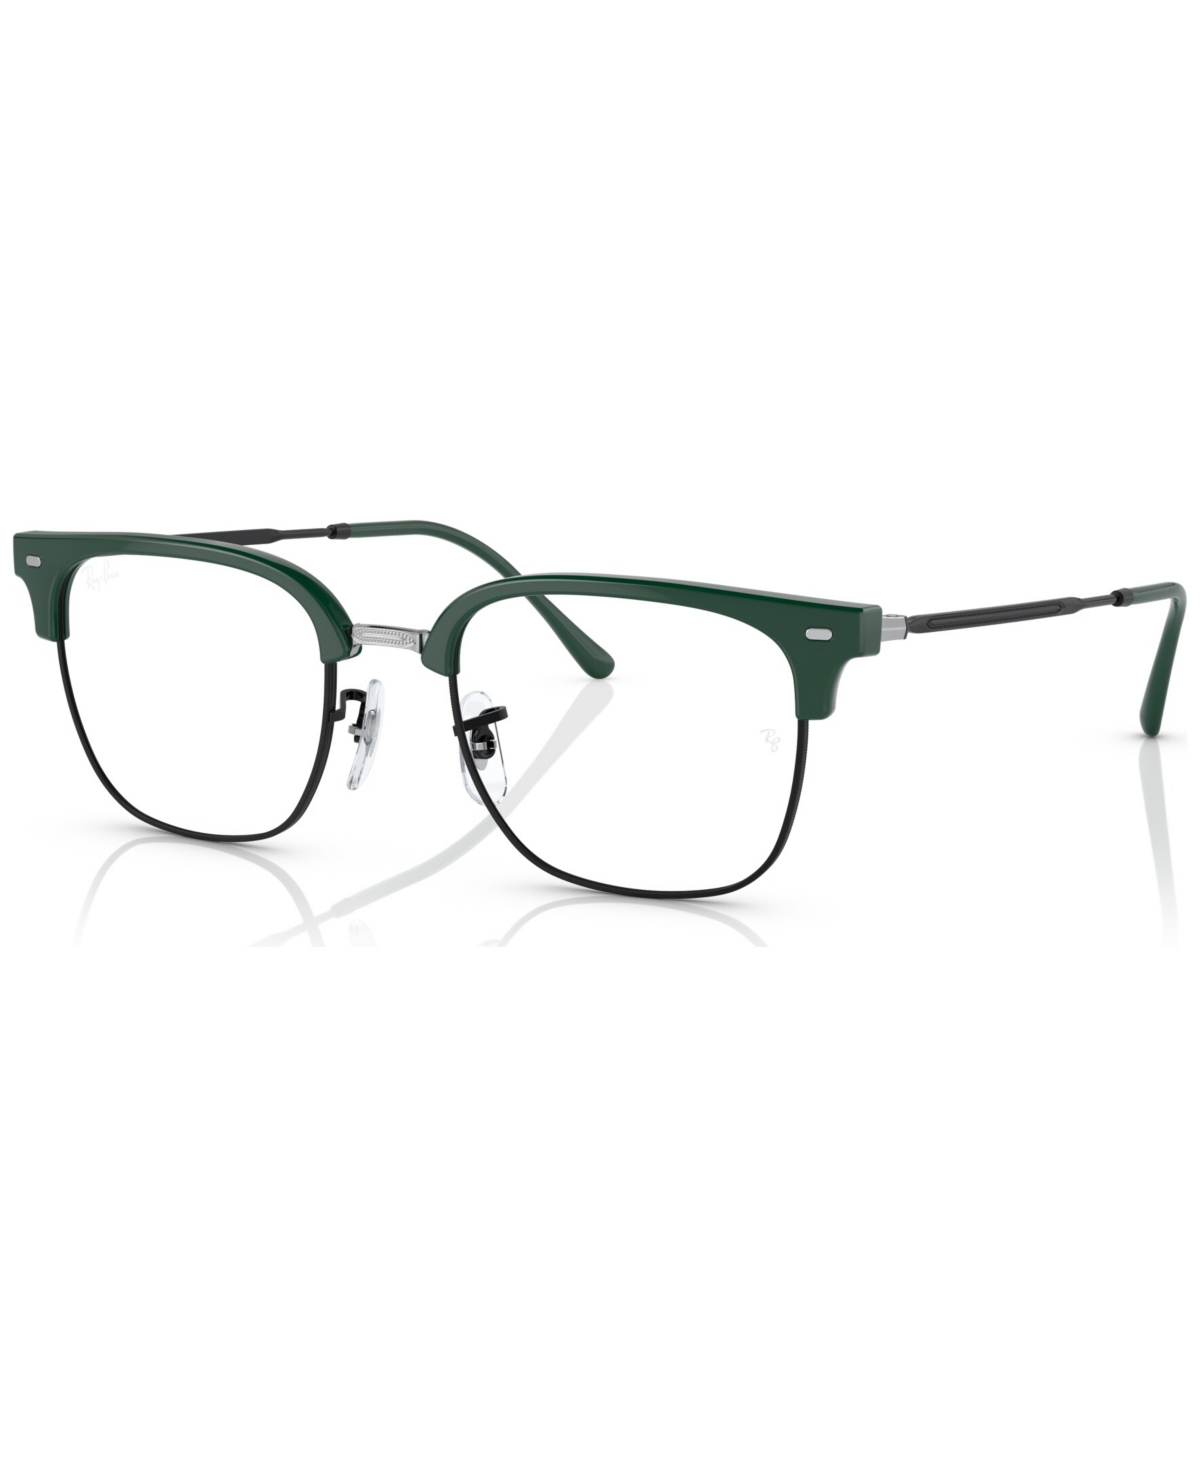 Unisex Square Eyeglasses, RX721649-o - Green on Black